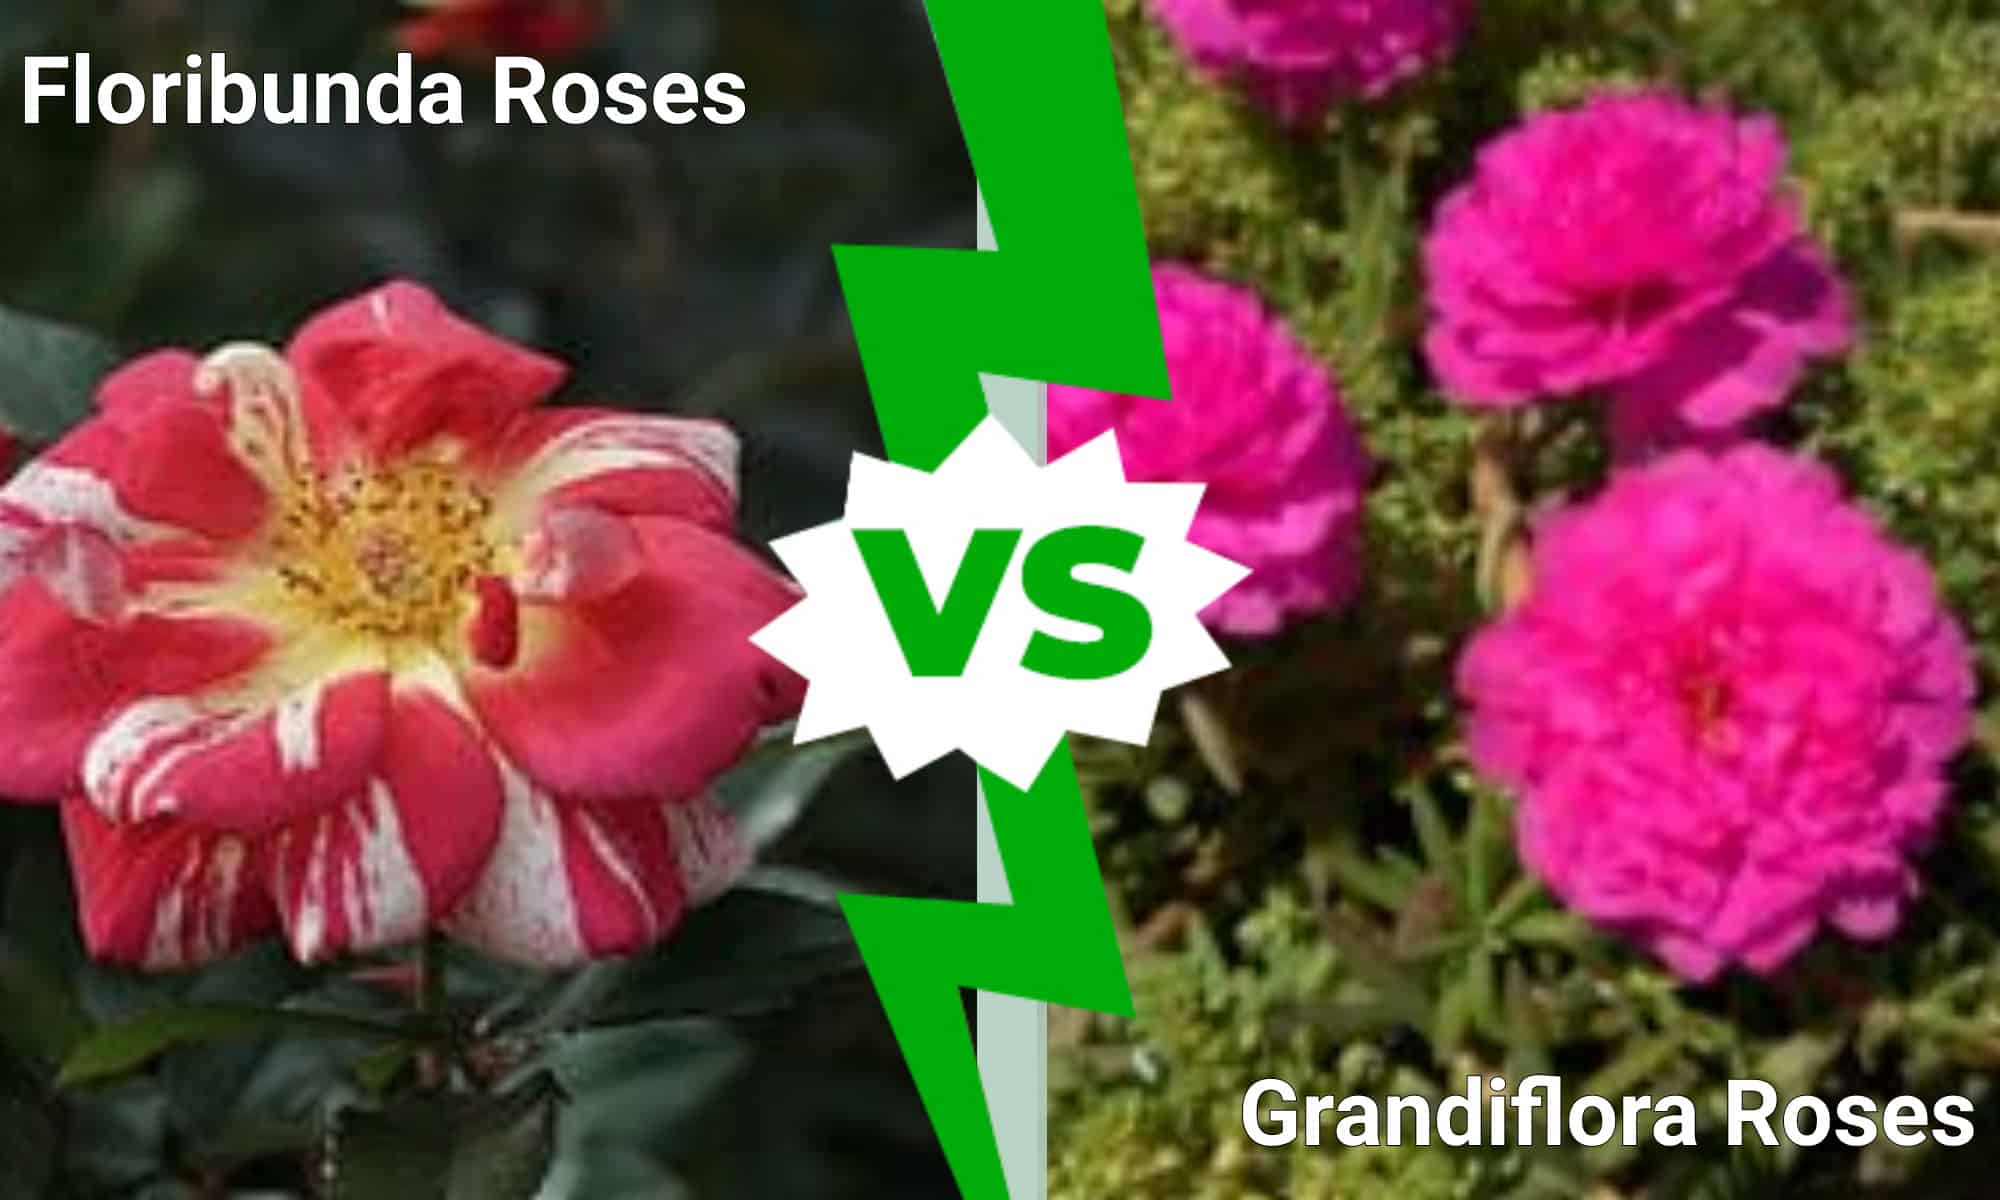 Grandiflora vs floribuda roses infographic